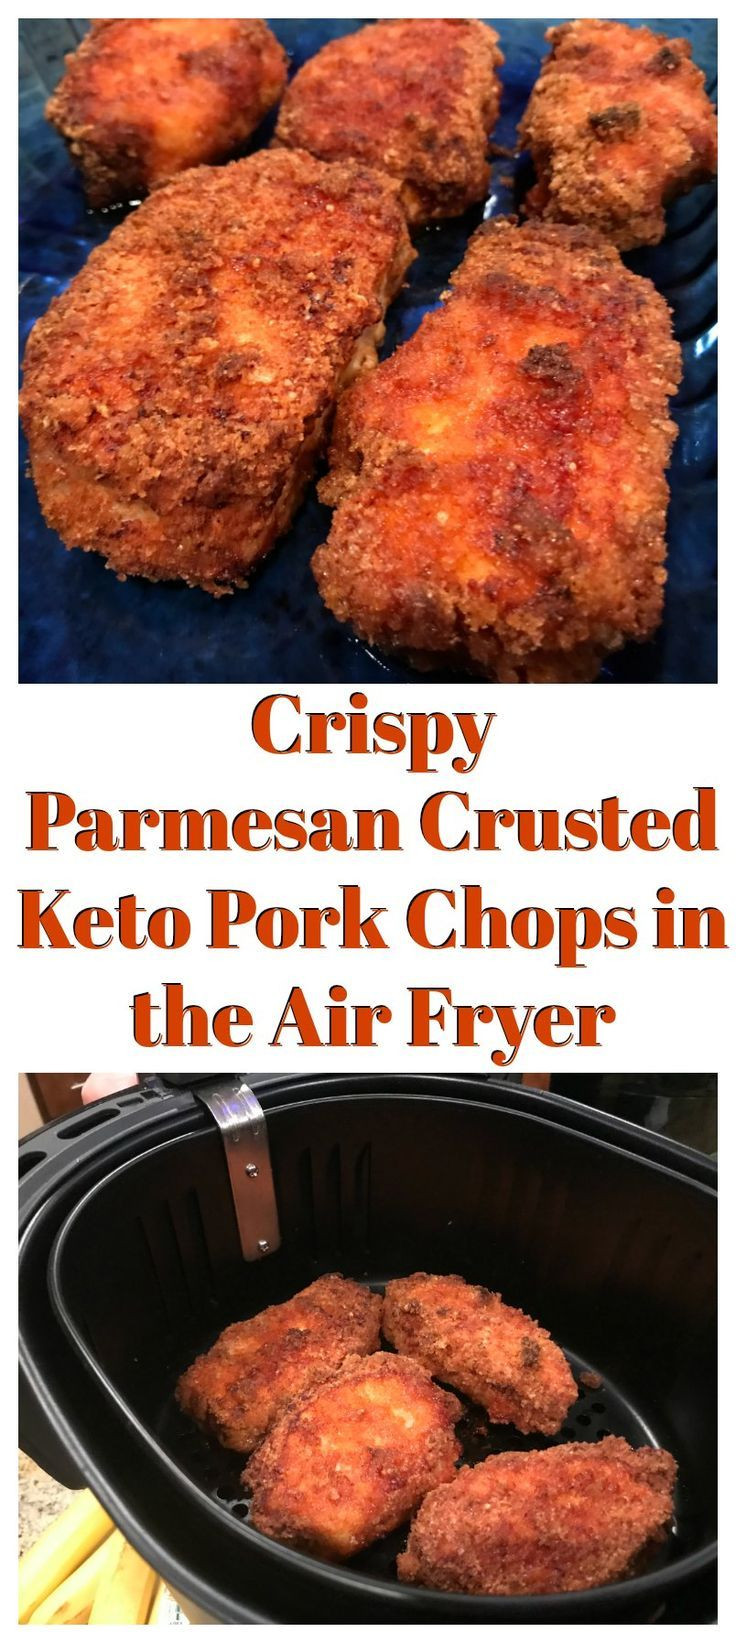 Air Fryer Keto Recipes Pork Chops
 Crispy Keto Parmesan Crusted Pork Chops in the Air Fryer